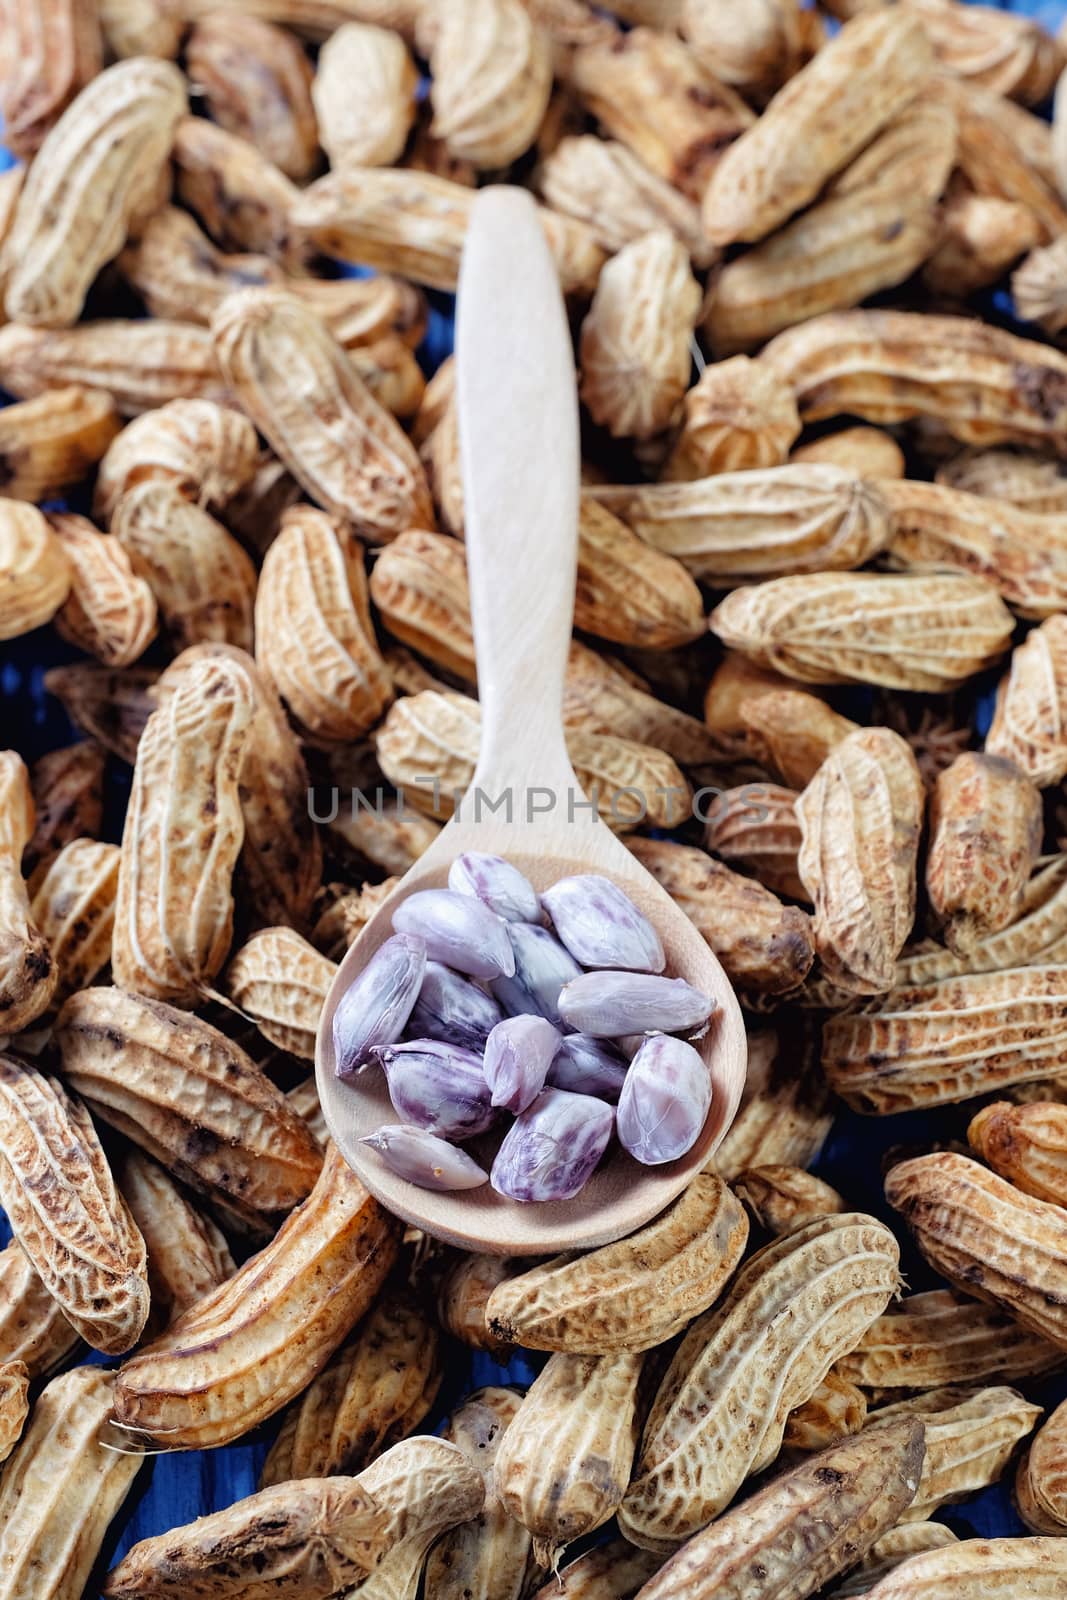 Peanuts on blue wood background by Surasak